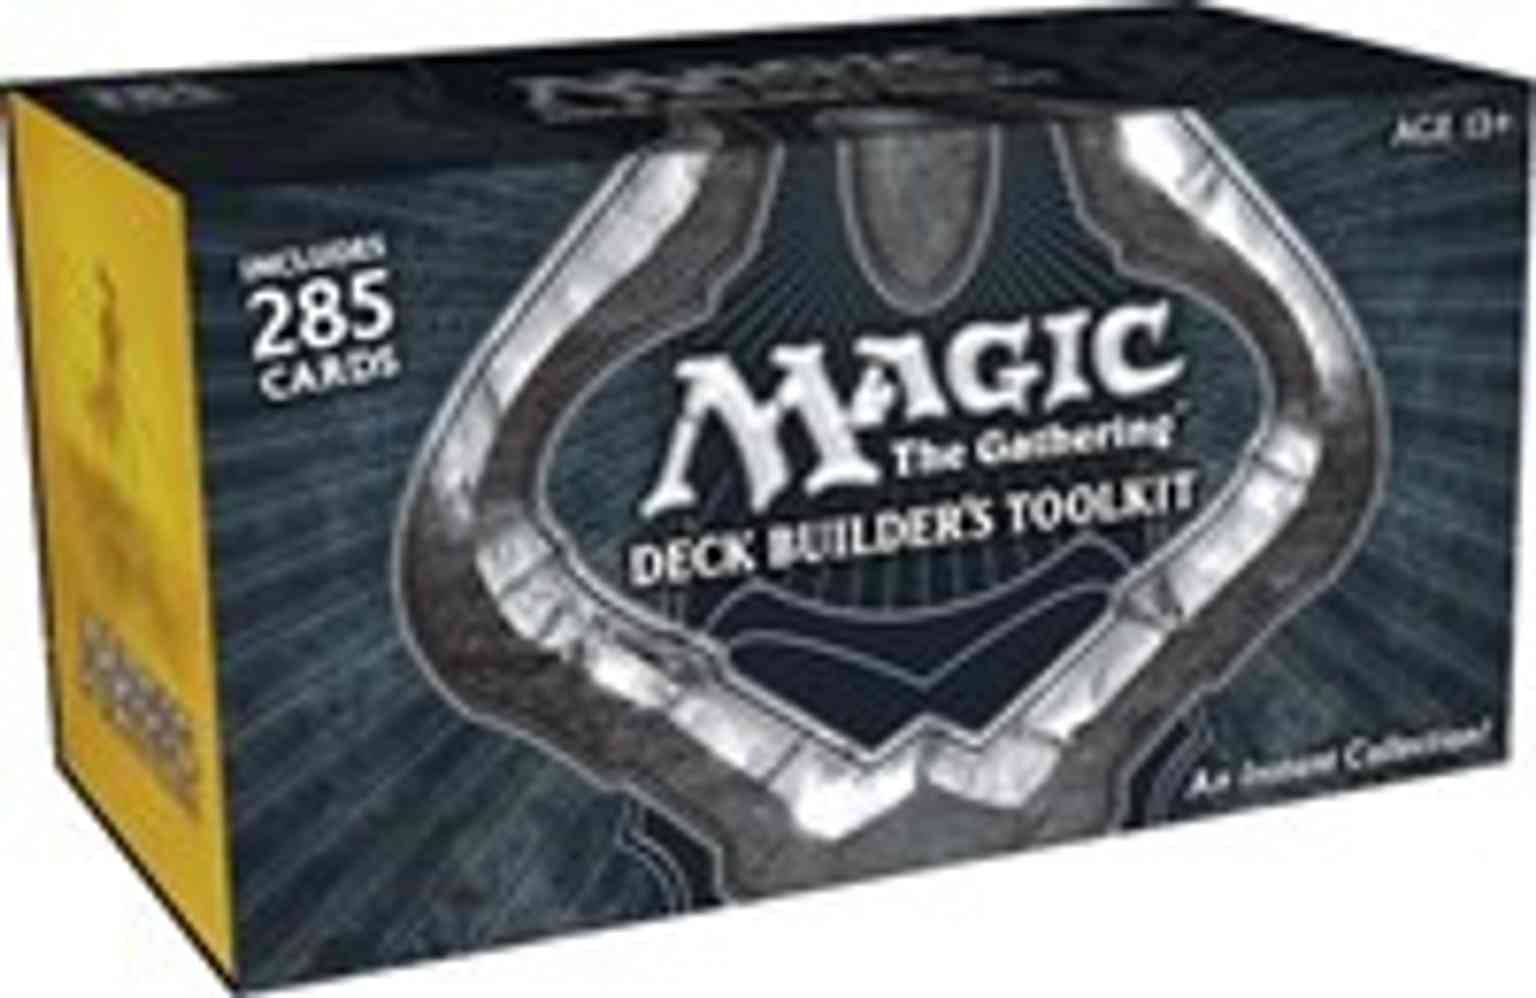 Magic 2013 (M13) - Deck Builder's Toolkit magic card front